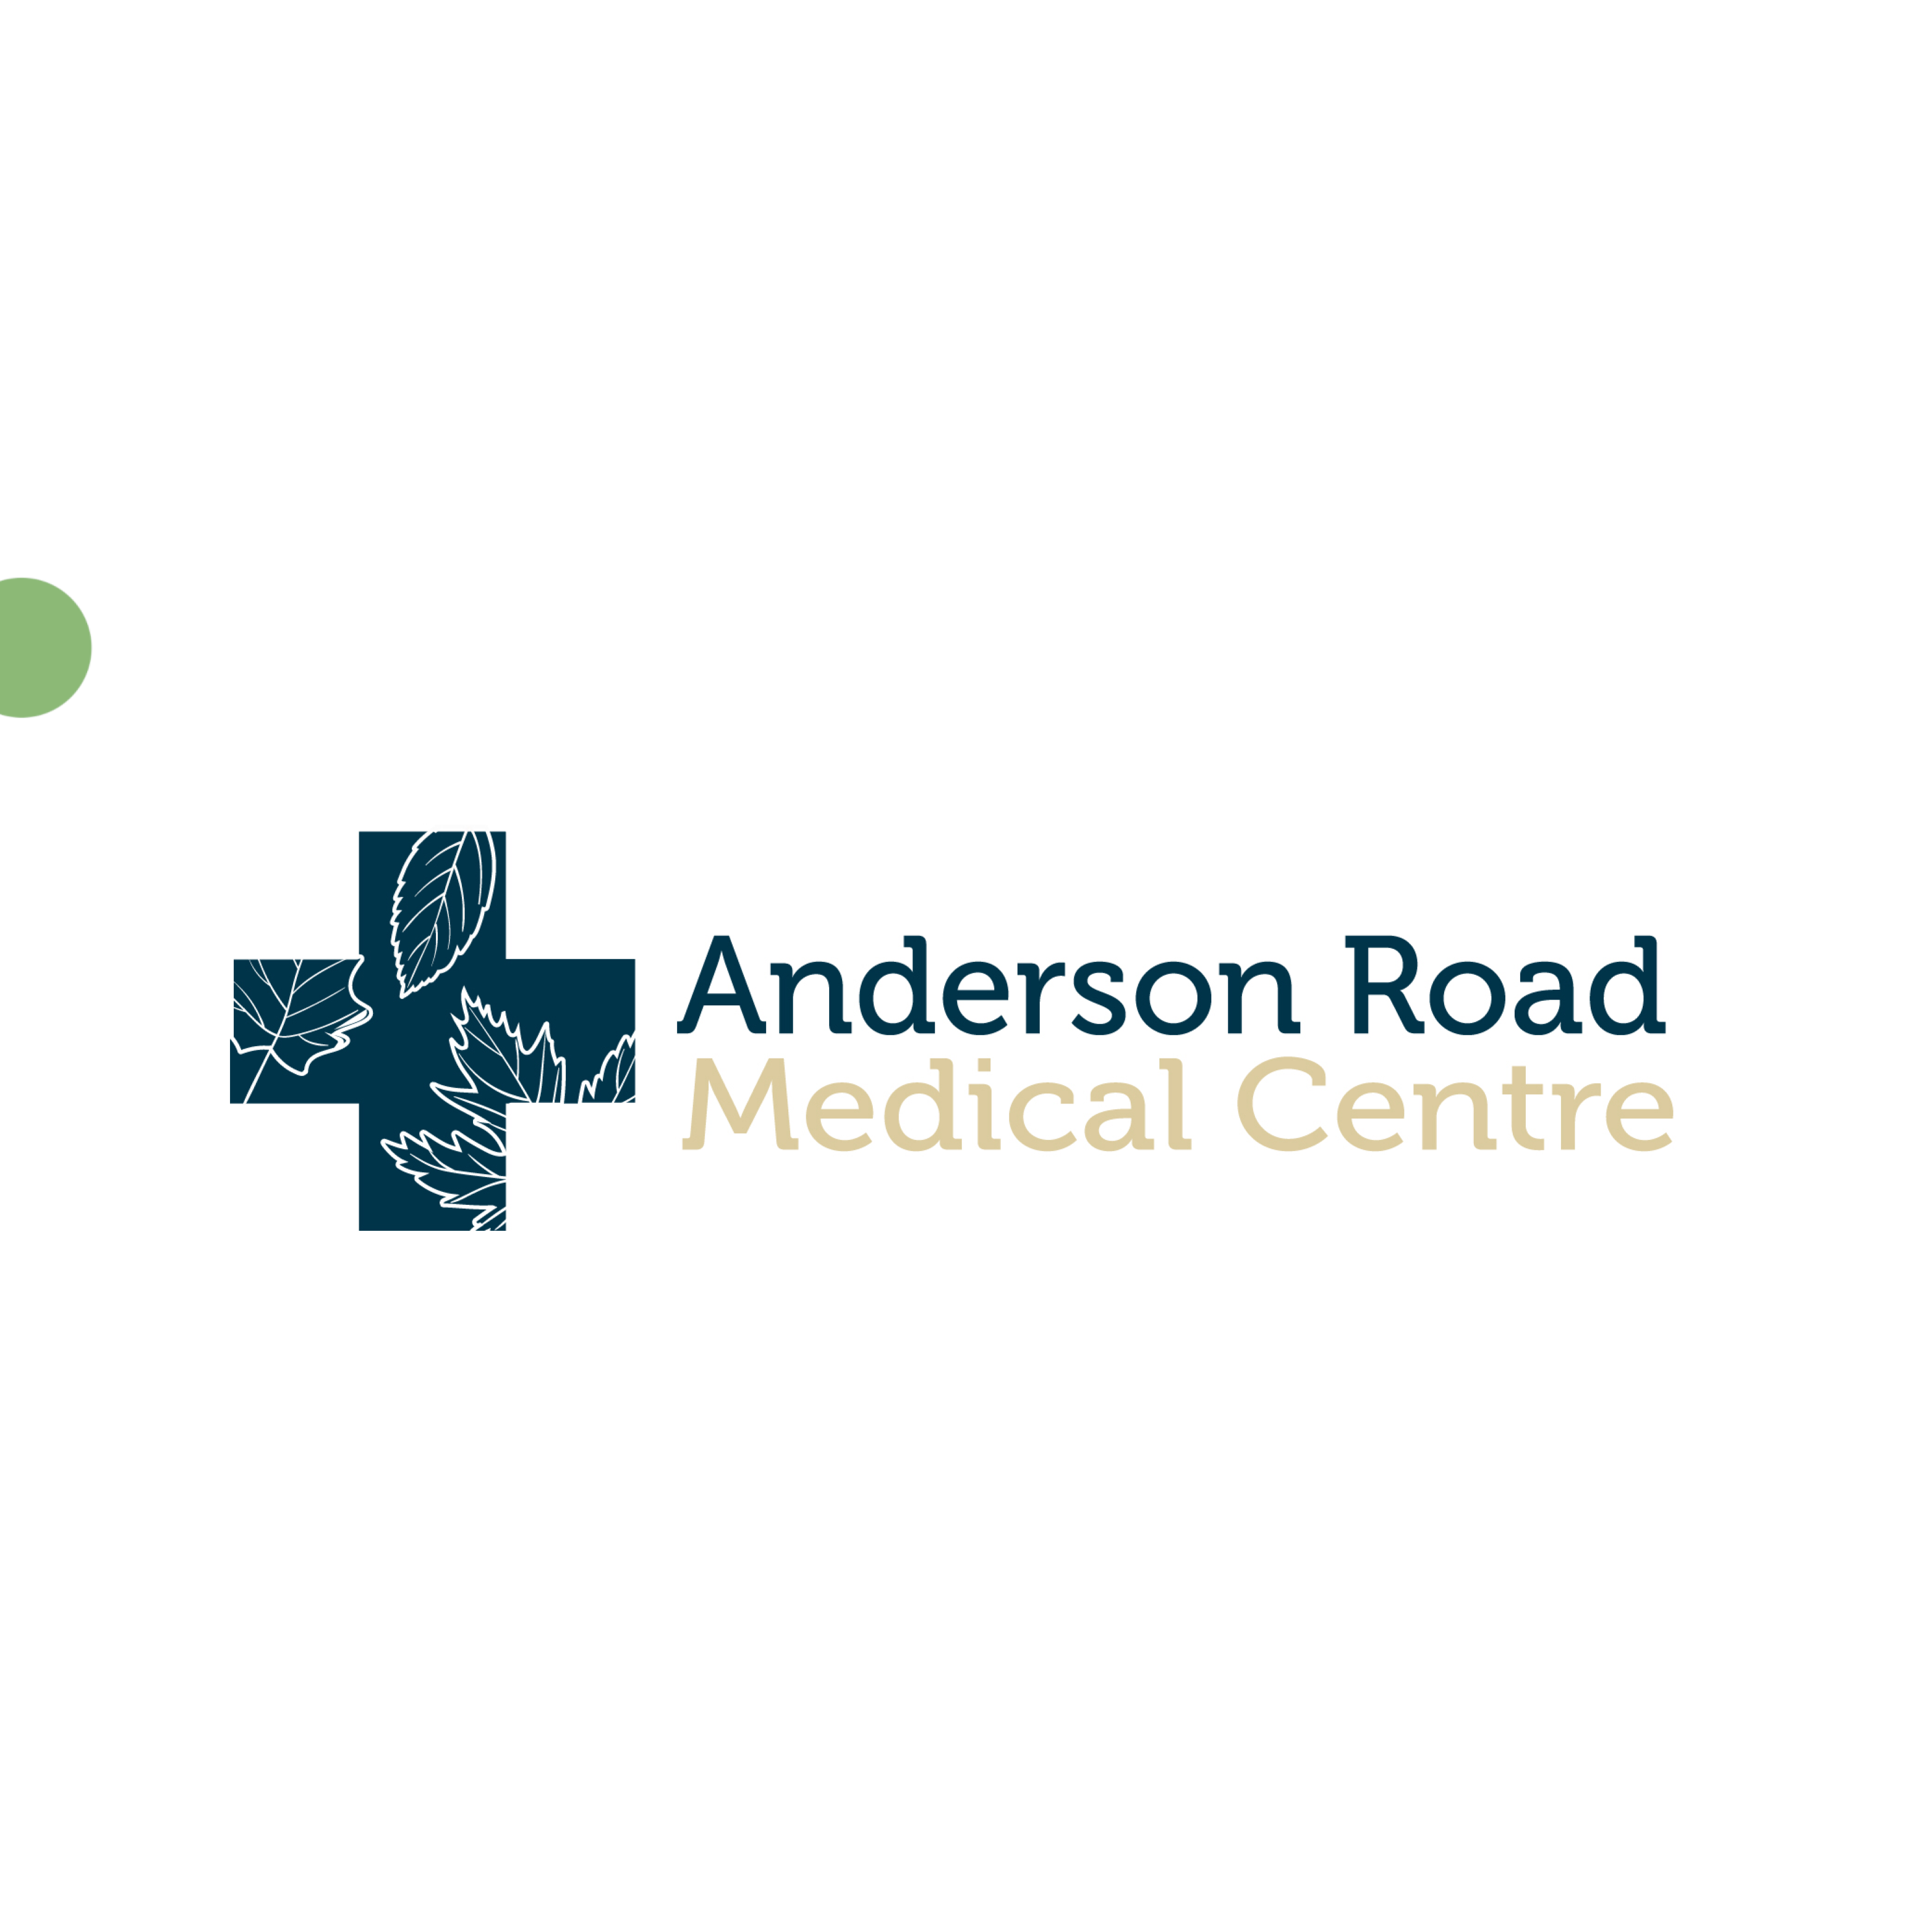 Anderson Road Medical Centre